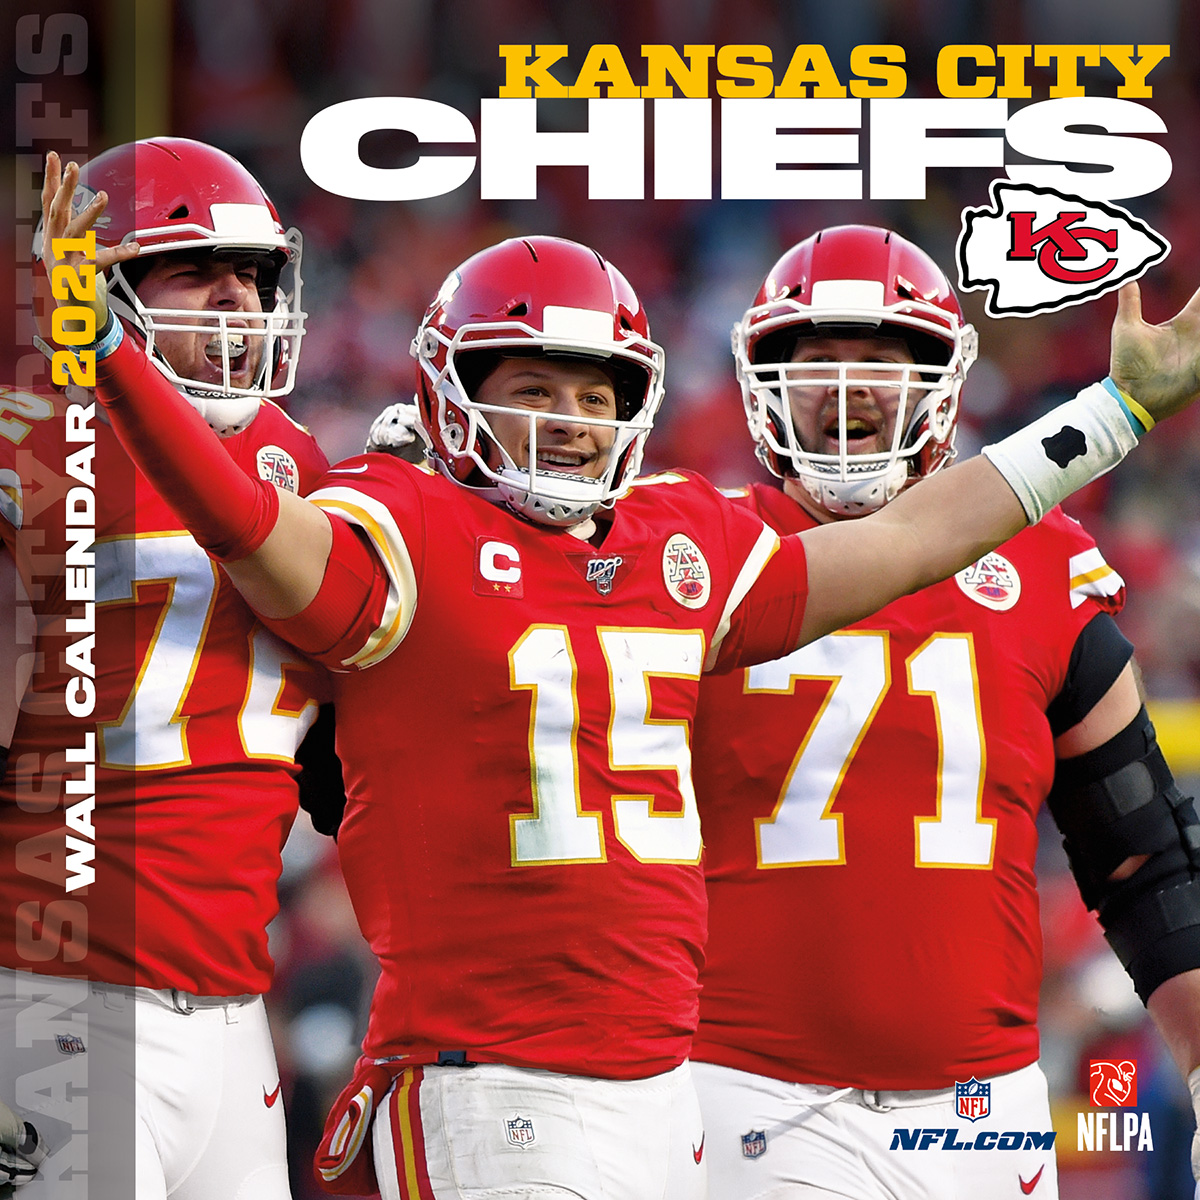 Kalender 2021 - Kansas City Chiefs